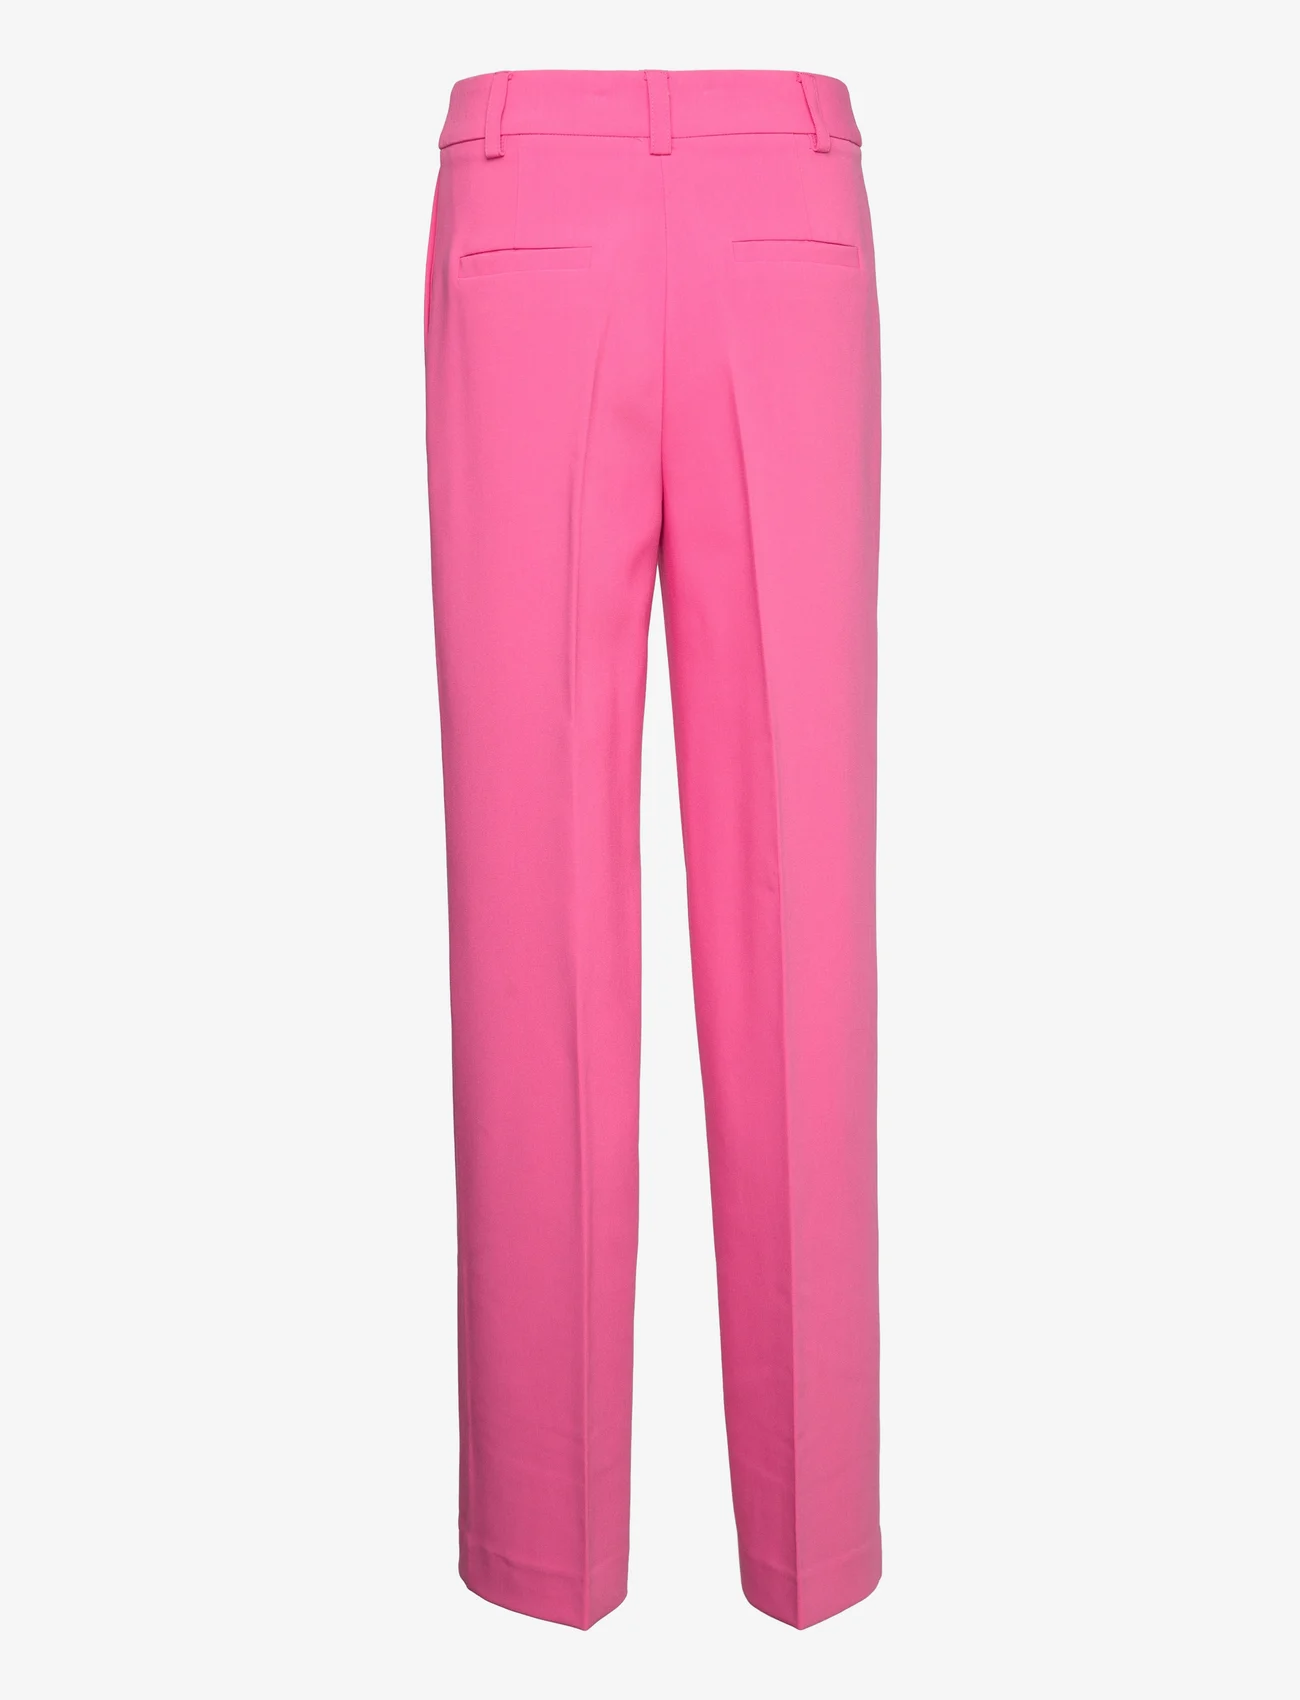 Modström - Gale pants - feestelijke kleding voor outlet-prijzen - taffy pink - 1